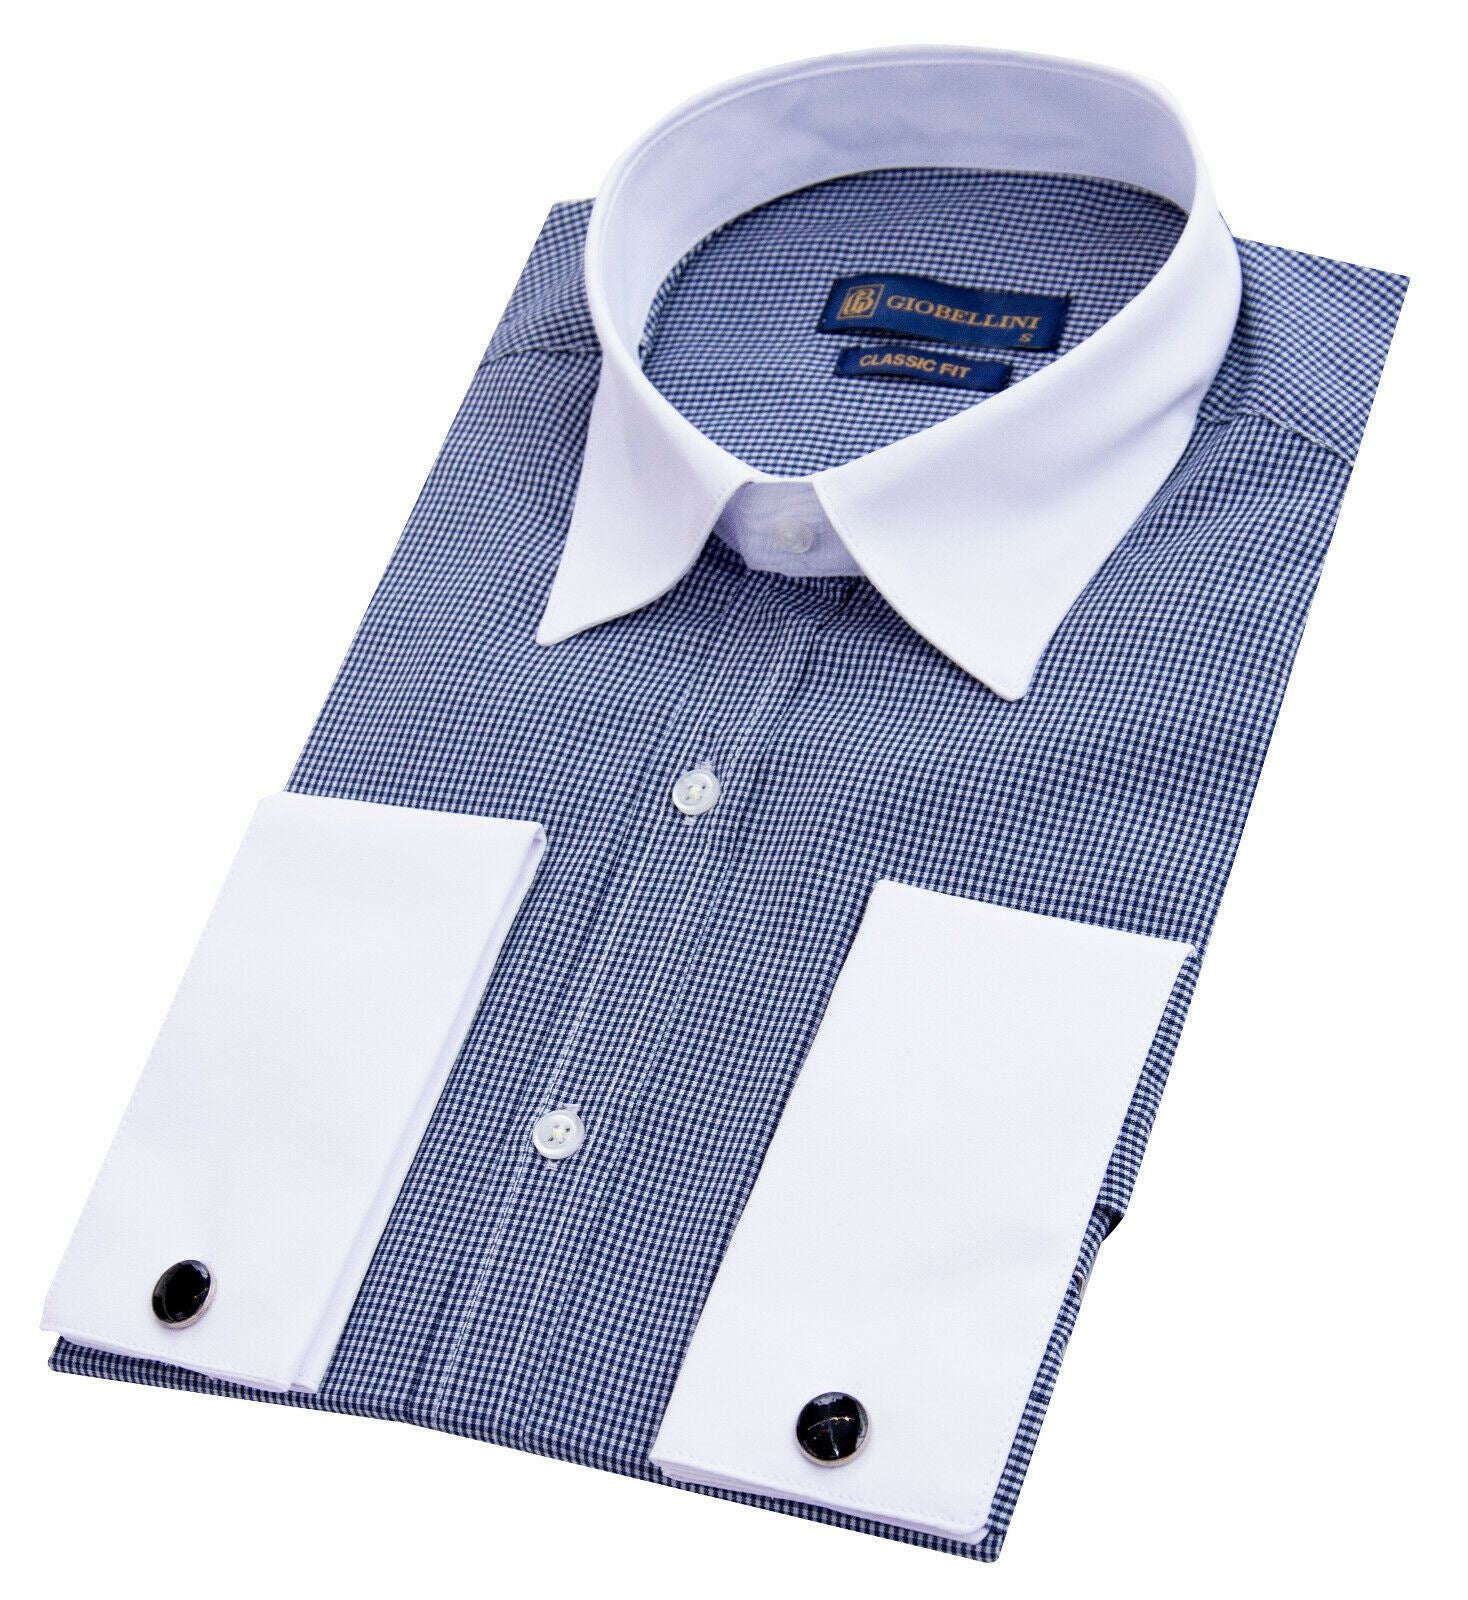 Mens Club Collar Navy Blue Shirt 1920s Peaky Blinders With Bar Poplin Pin Smart - Upperclass Fashions 